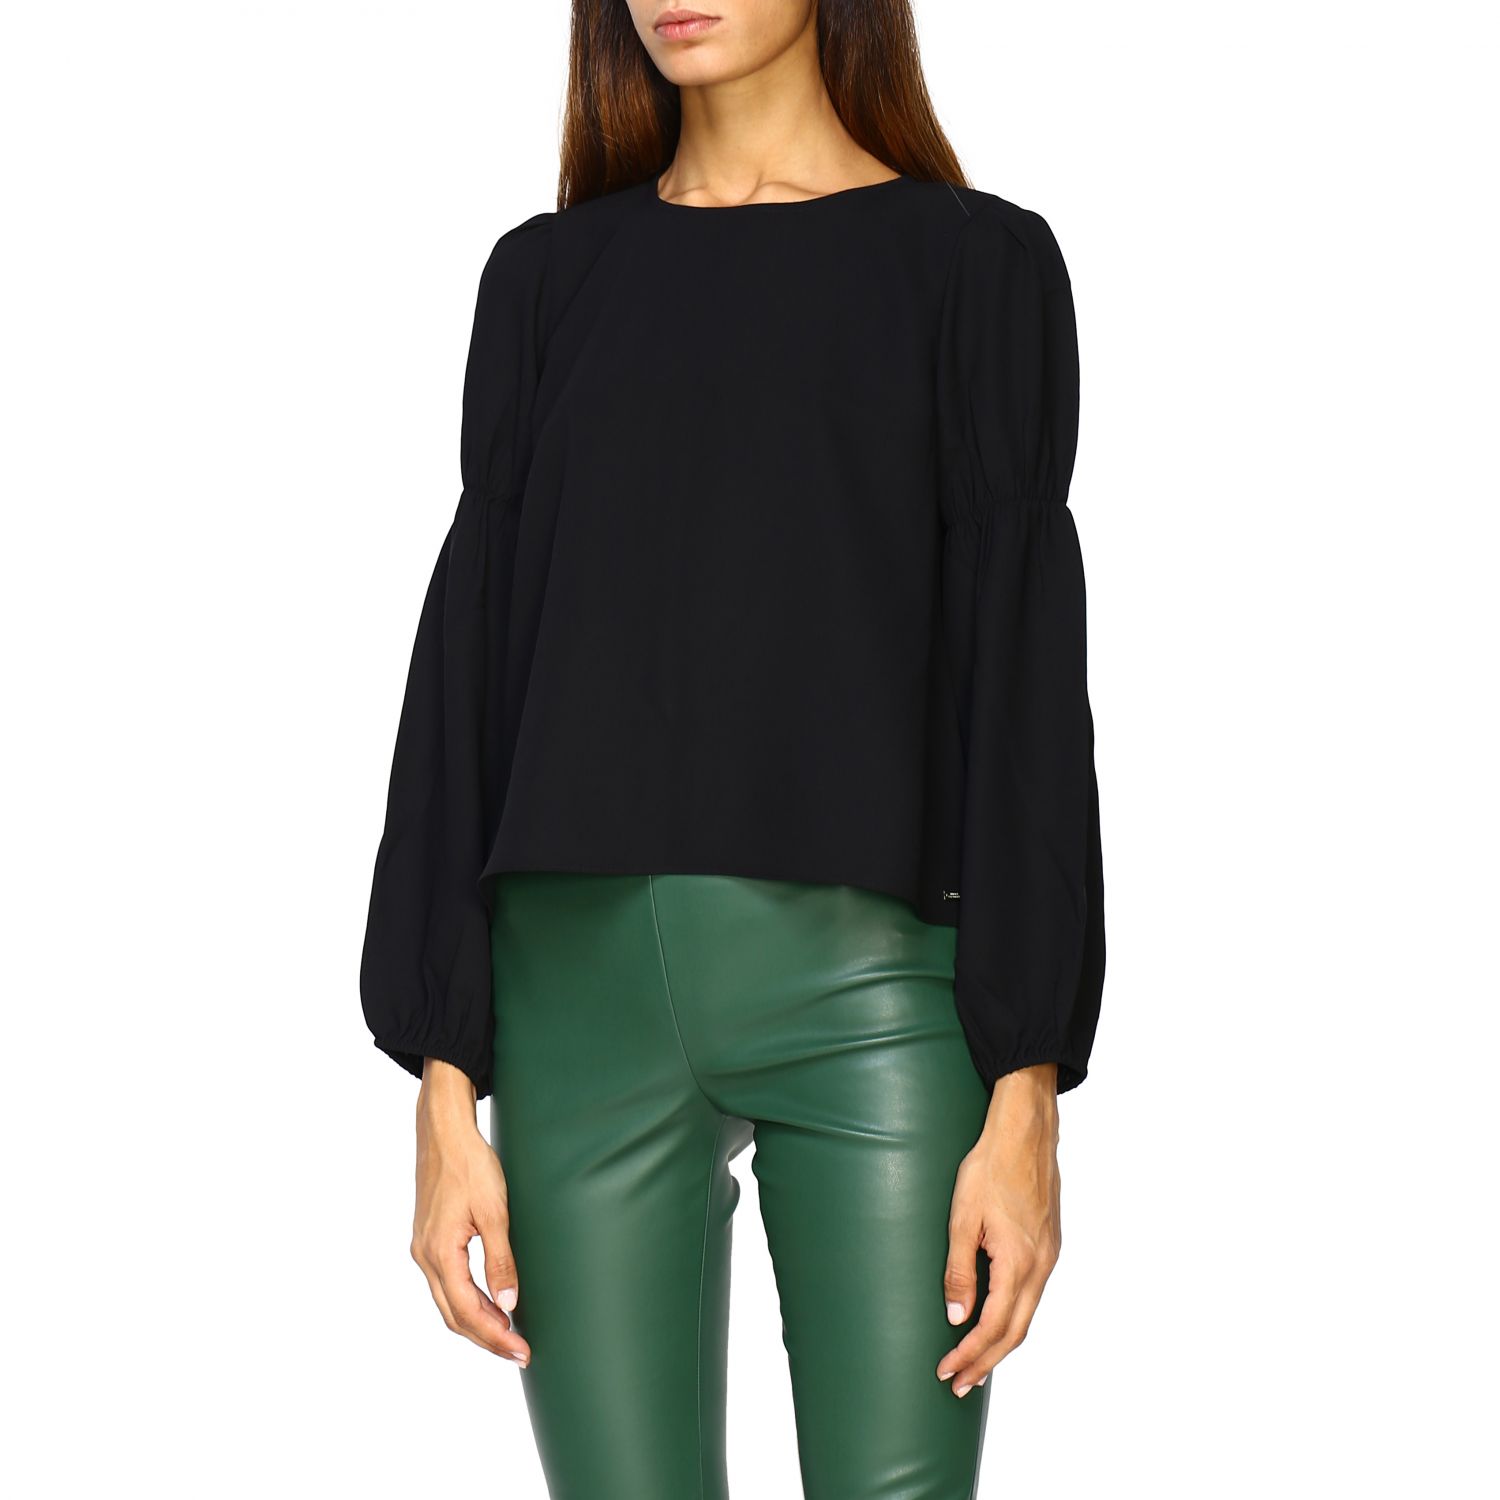 Armani Exchange Outlet: Shirt women - Black | Shirt Armani Exchange ...